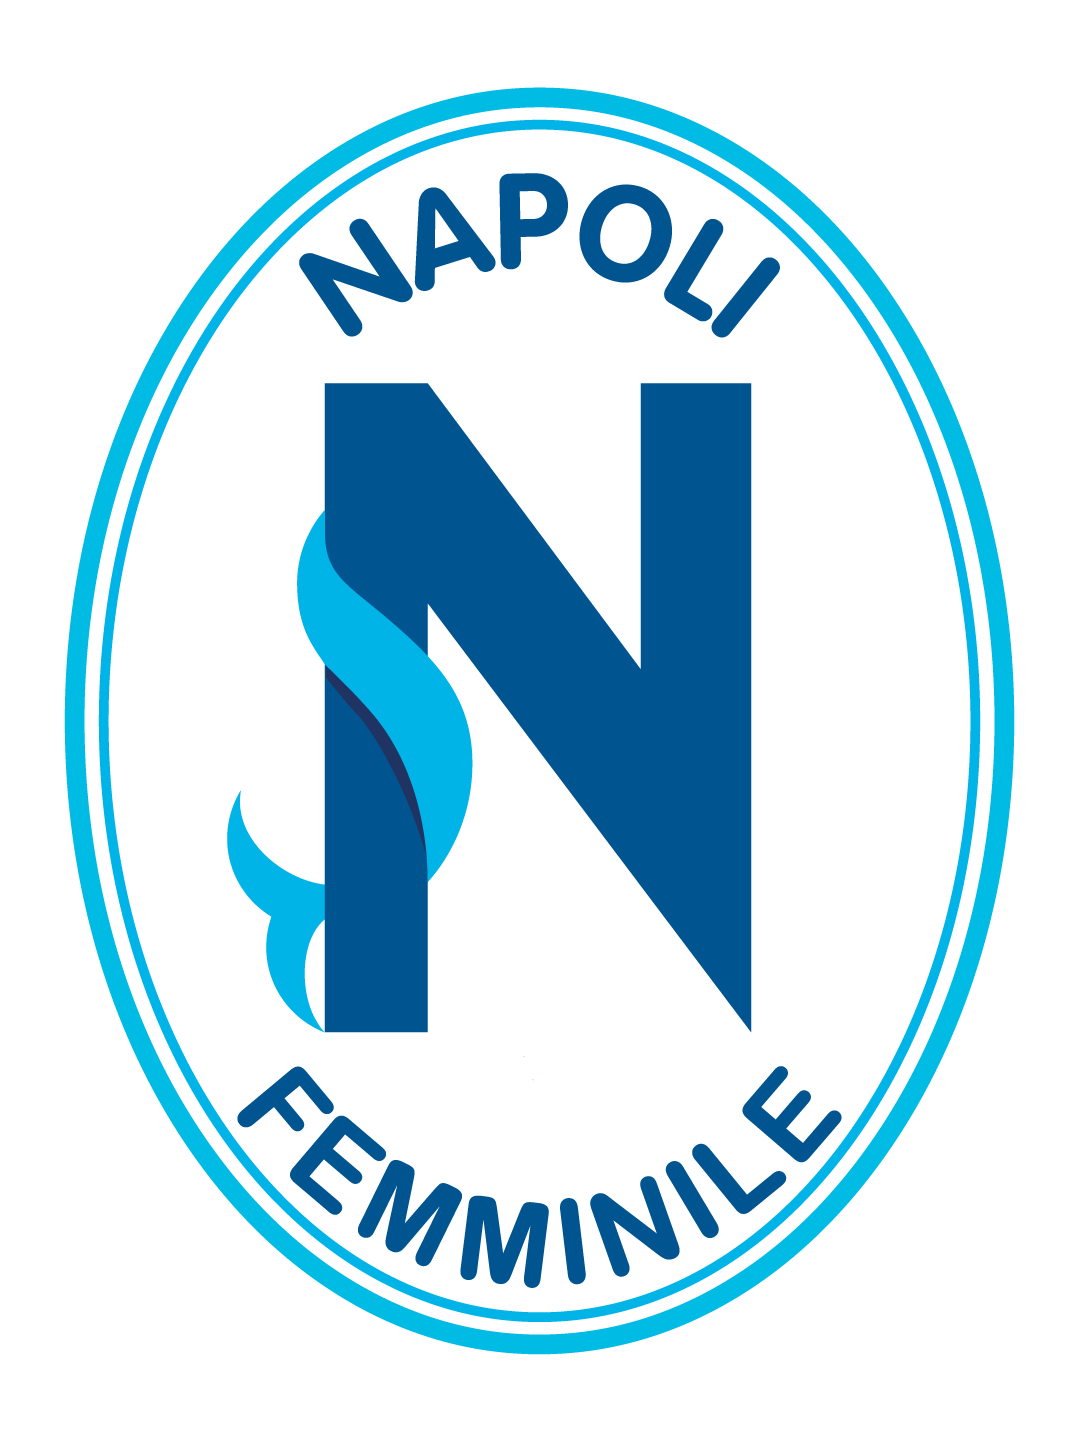 Napoli Femminile shop online